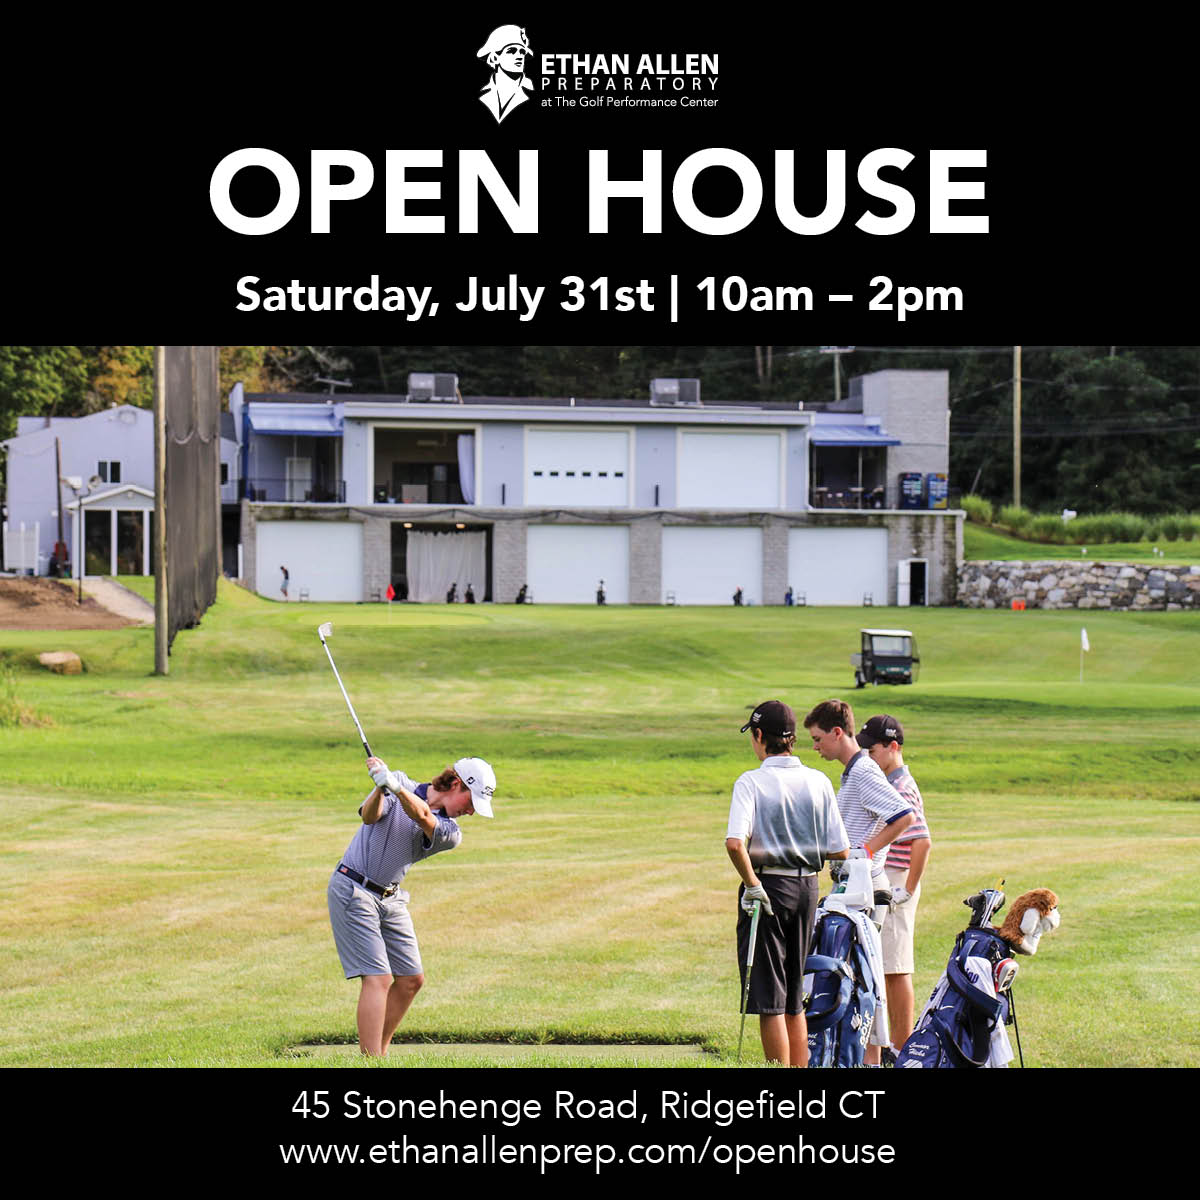 Ethan Allen Preparatory Open House on Saturday, July 31!